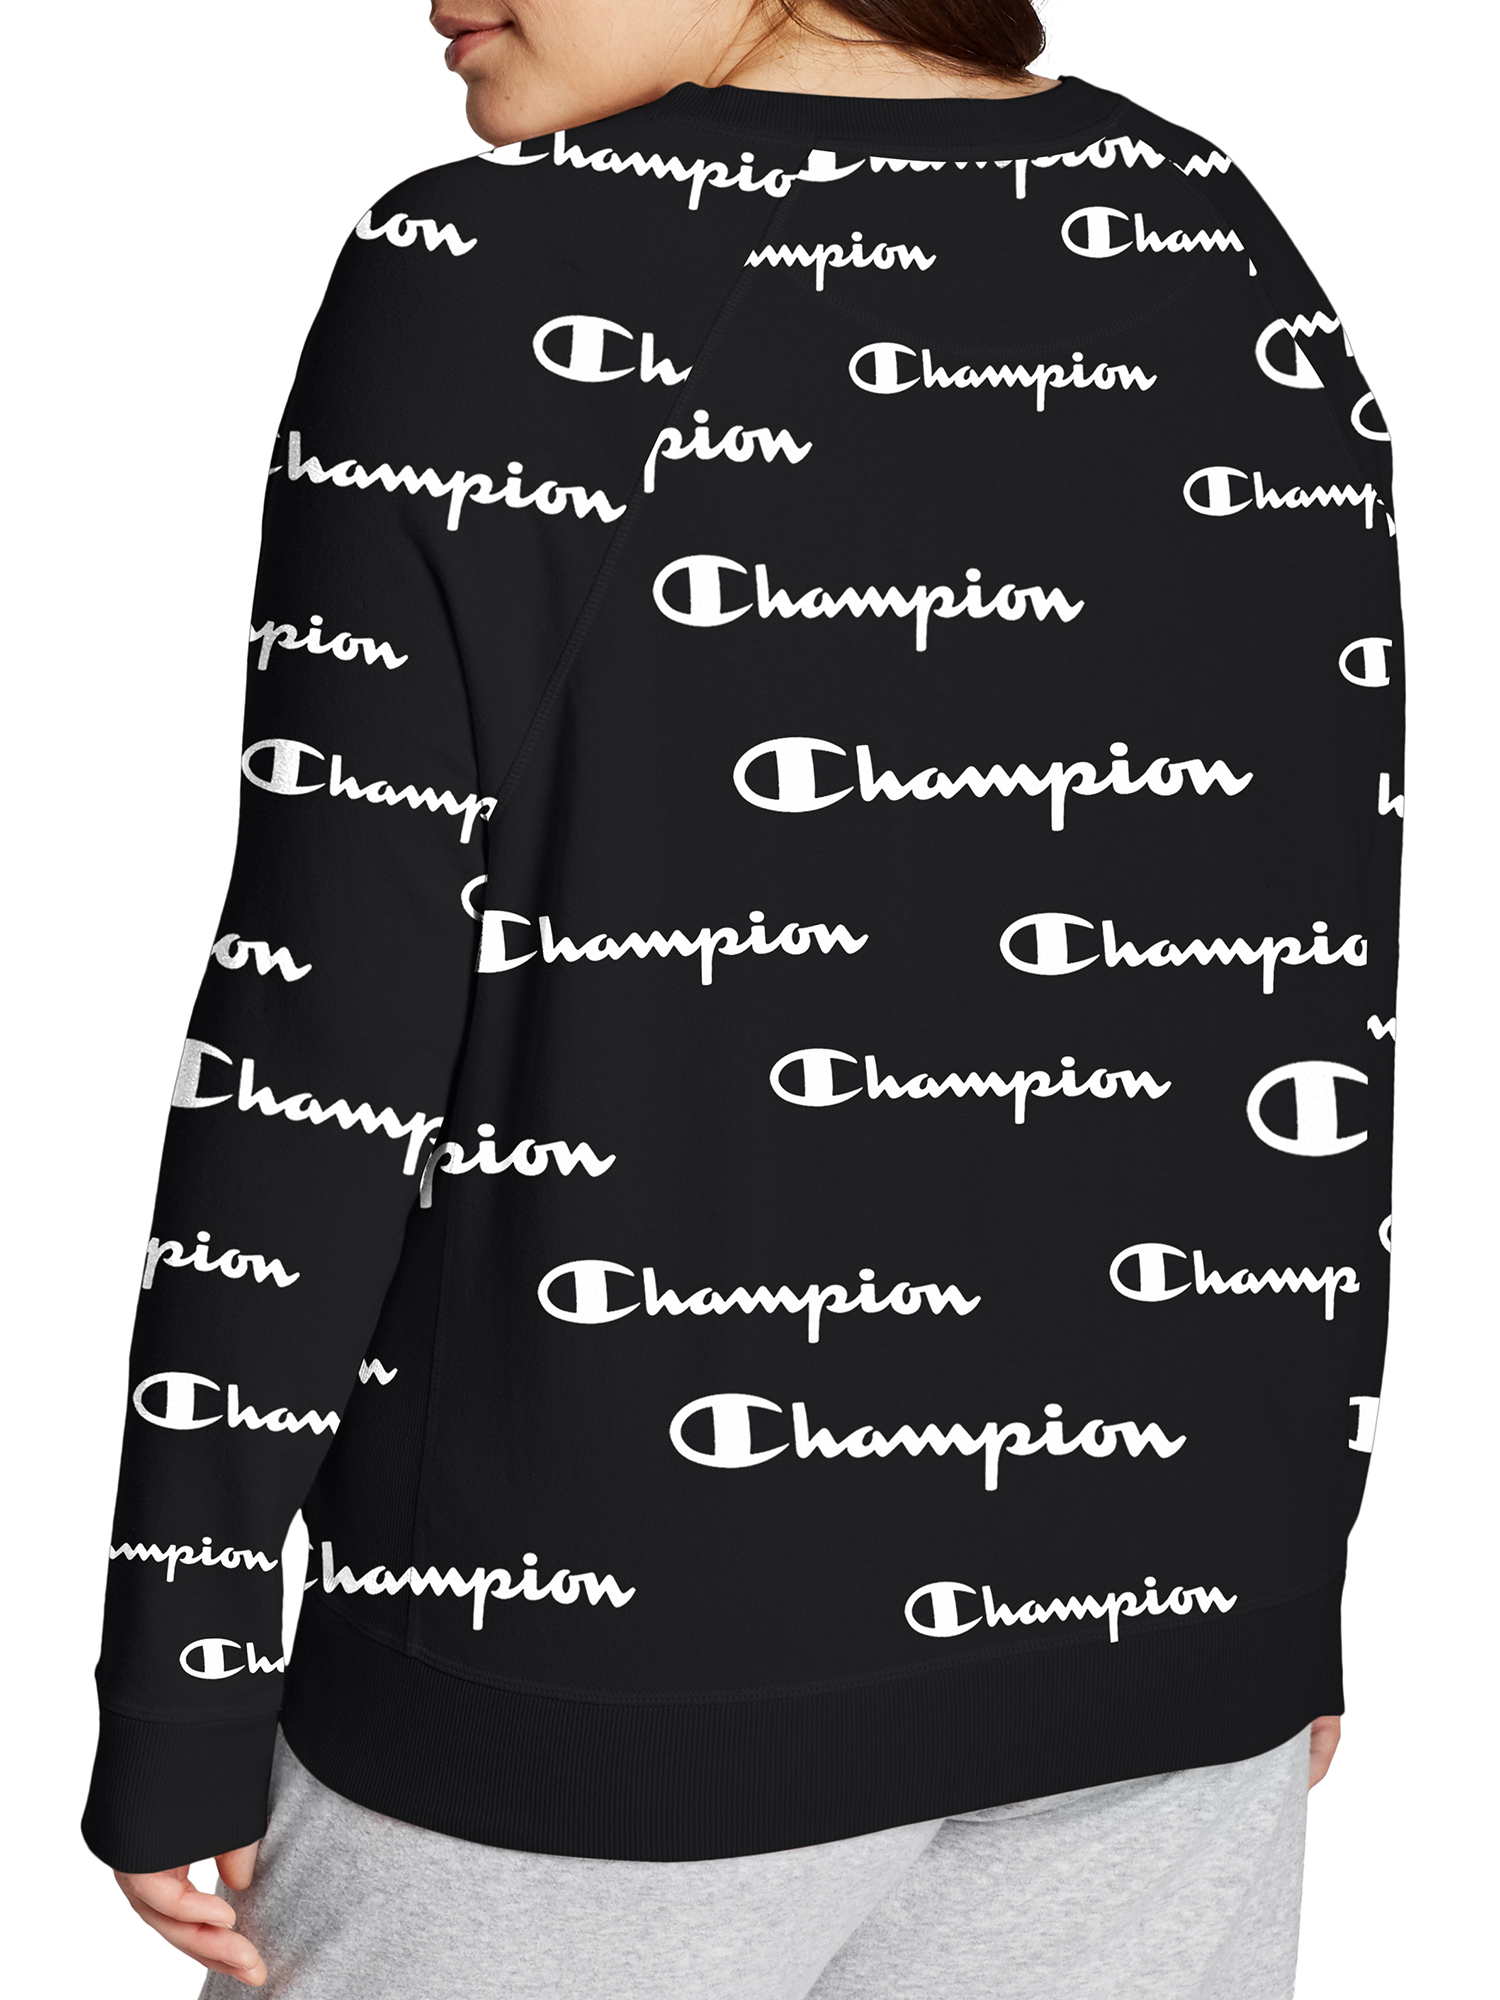 Champion Women's Plus Campus French Terry Crewneck Sweatshirt - image 4 of 5